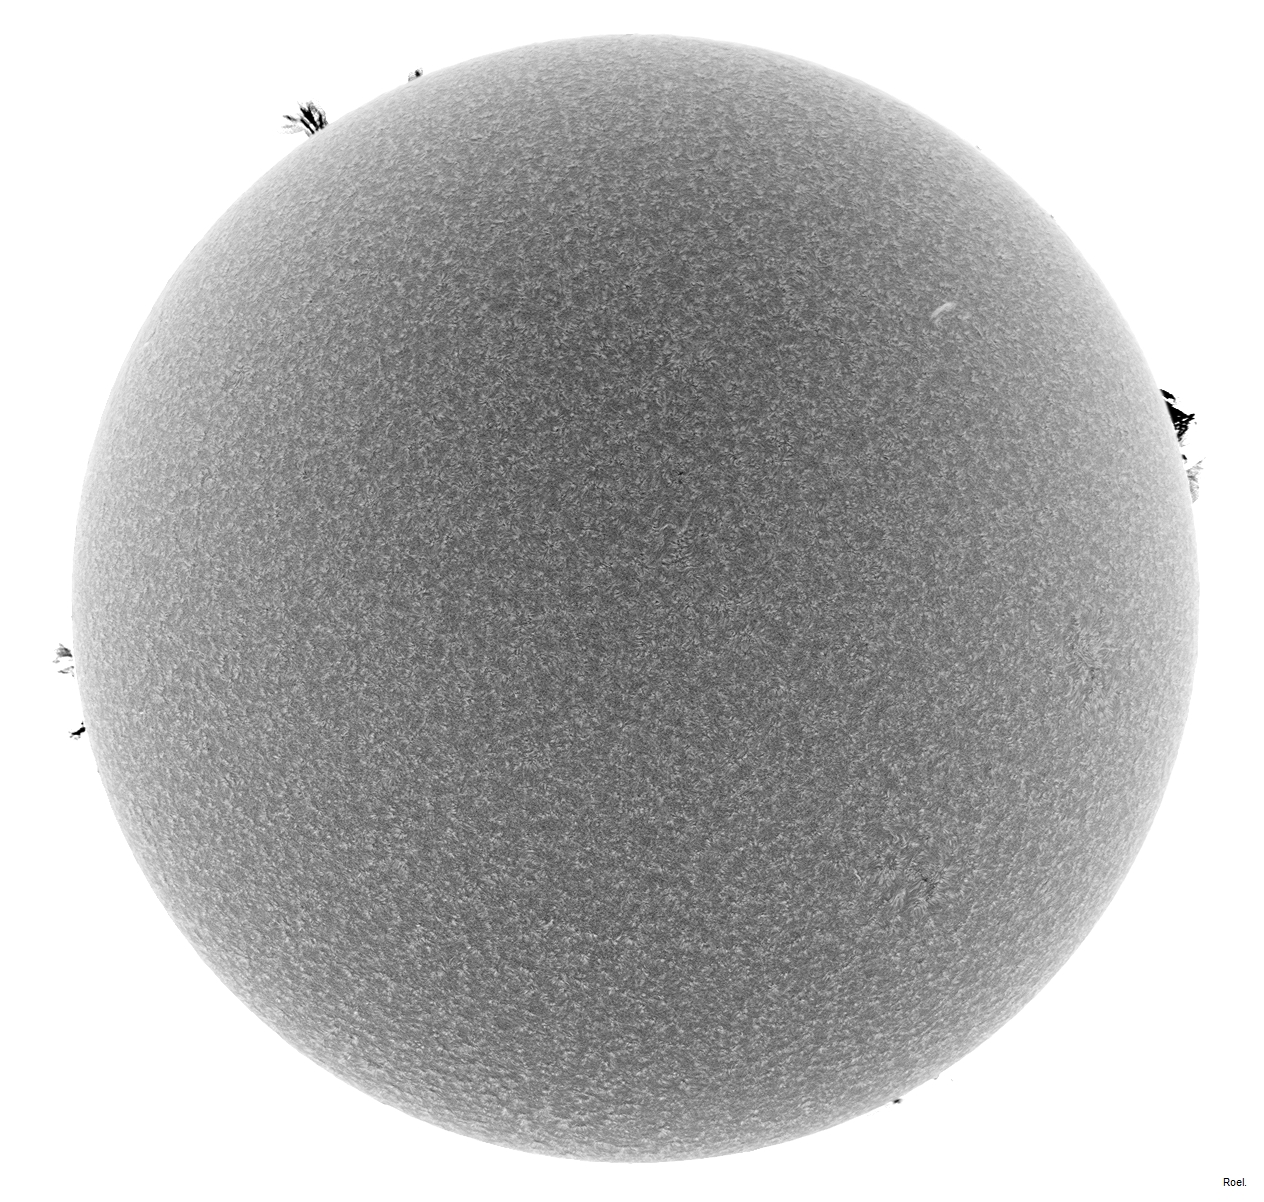 Sol del 11 de marzo del 2019-Solarmax 90-DS-BF30-2neg.jpg